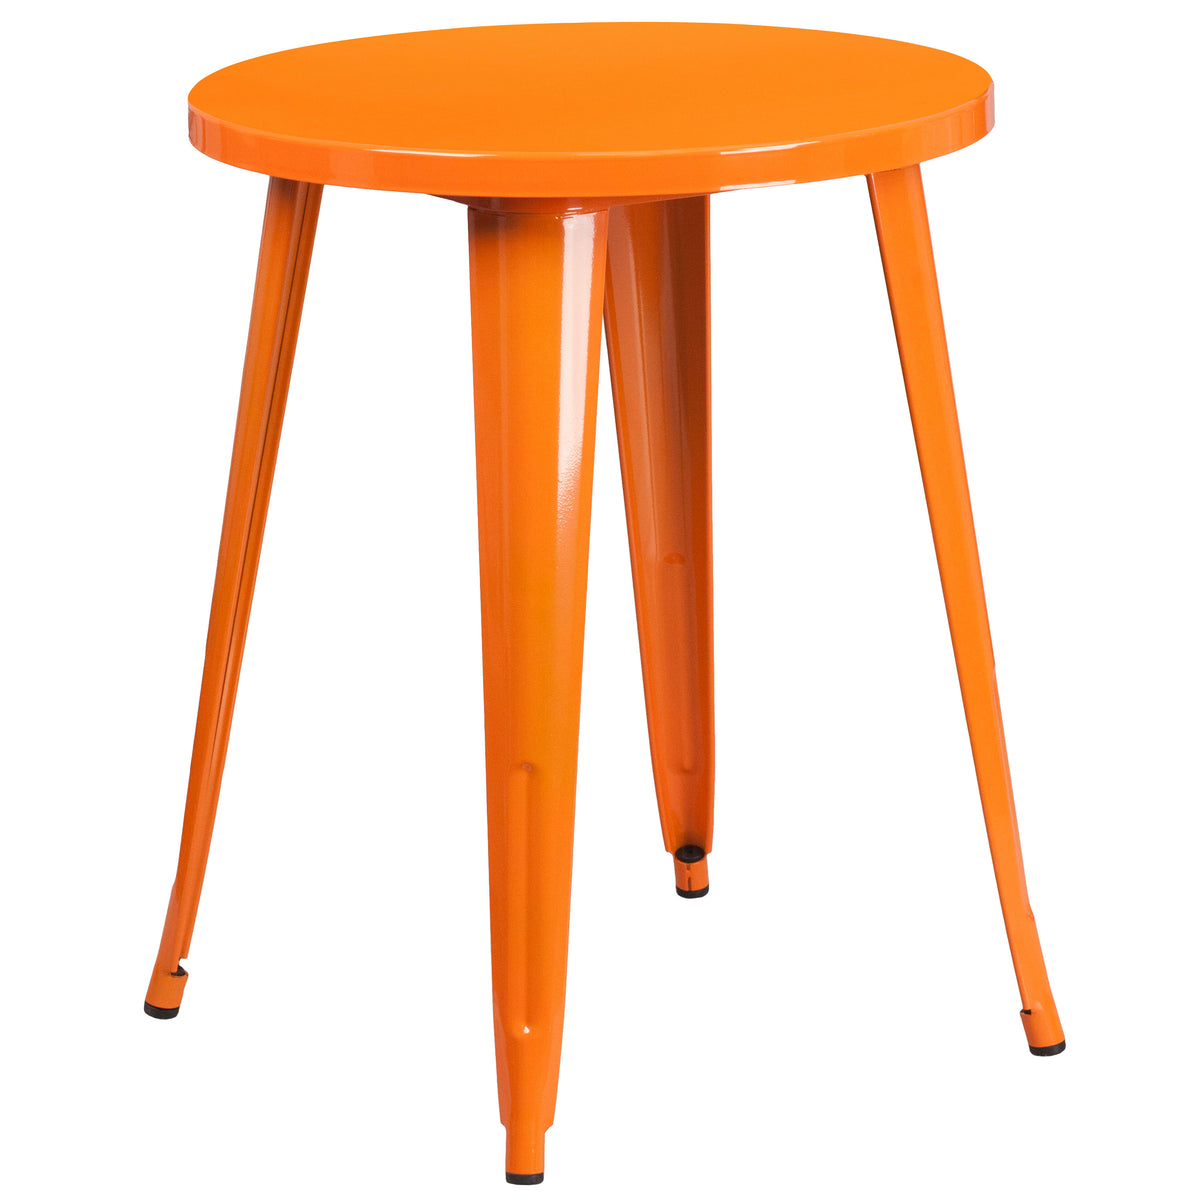 Orange |#| 24inch Round Orange Metal Indoor-Outdoor Table Set w/4 Vertical Slat Back Chairs